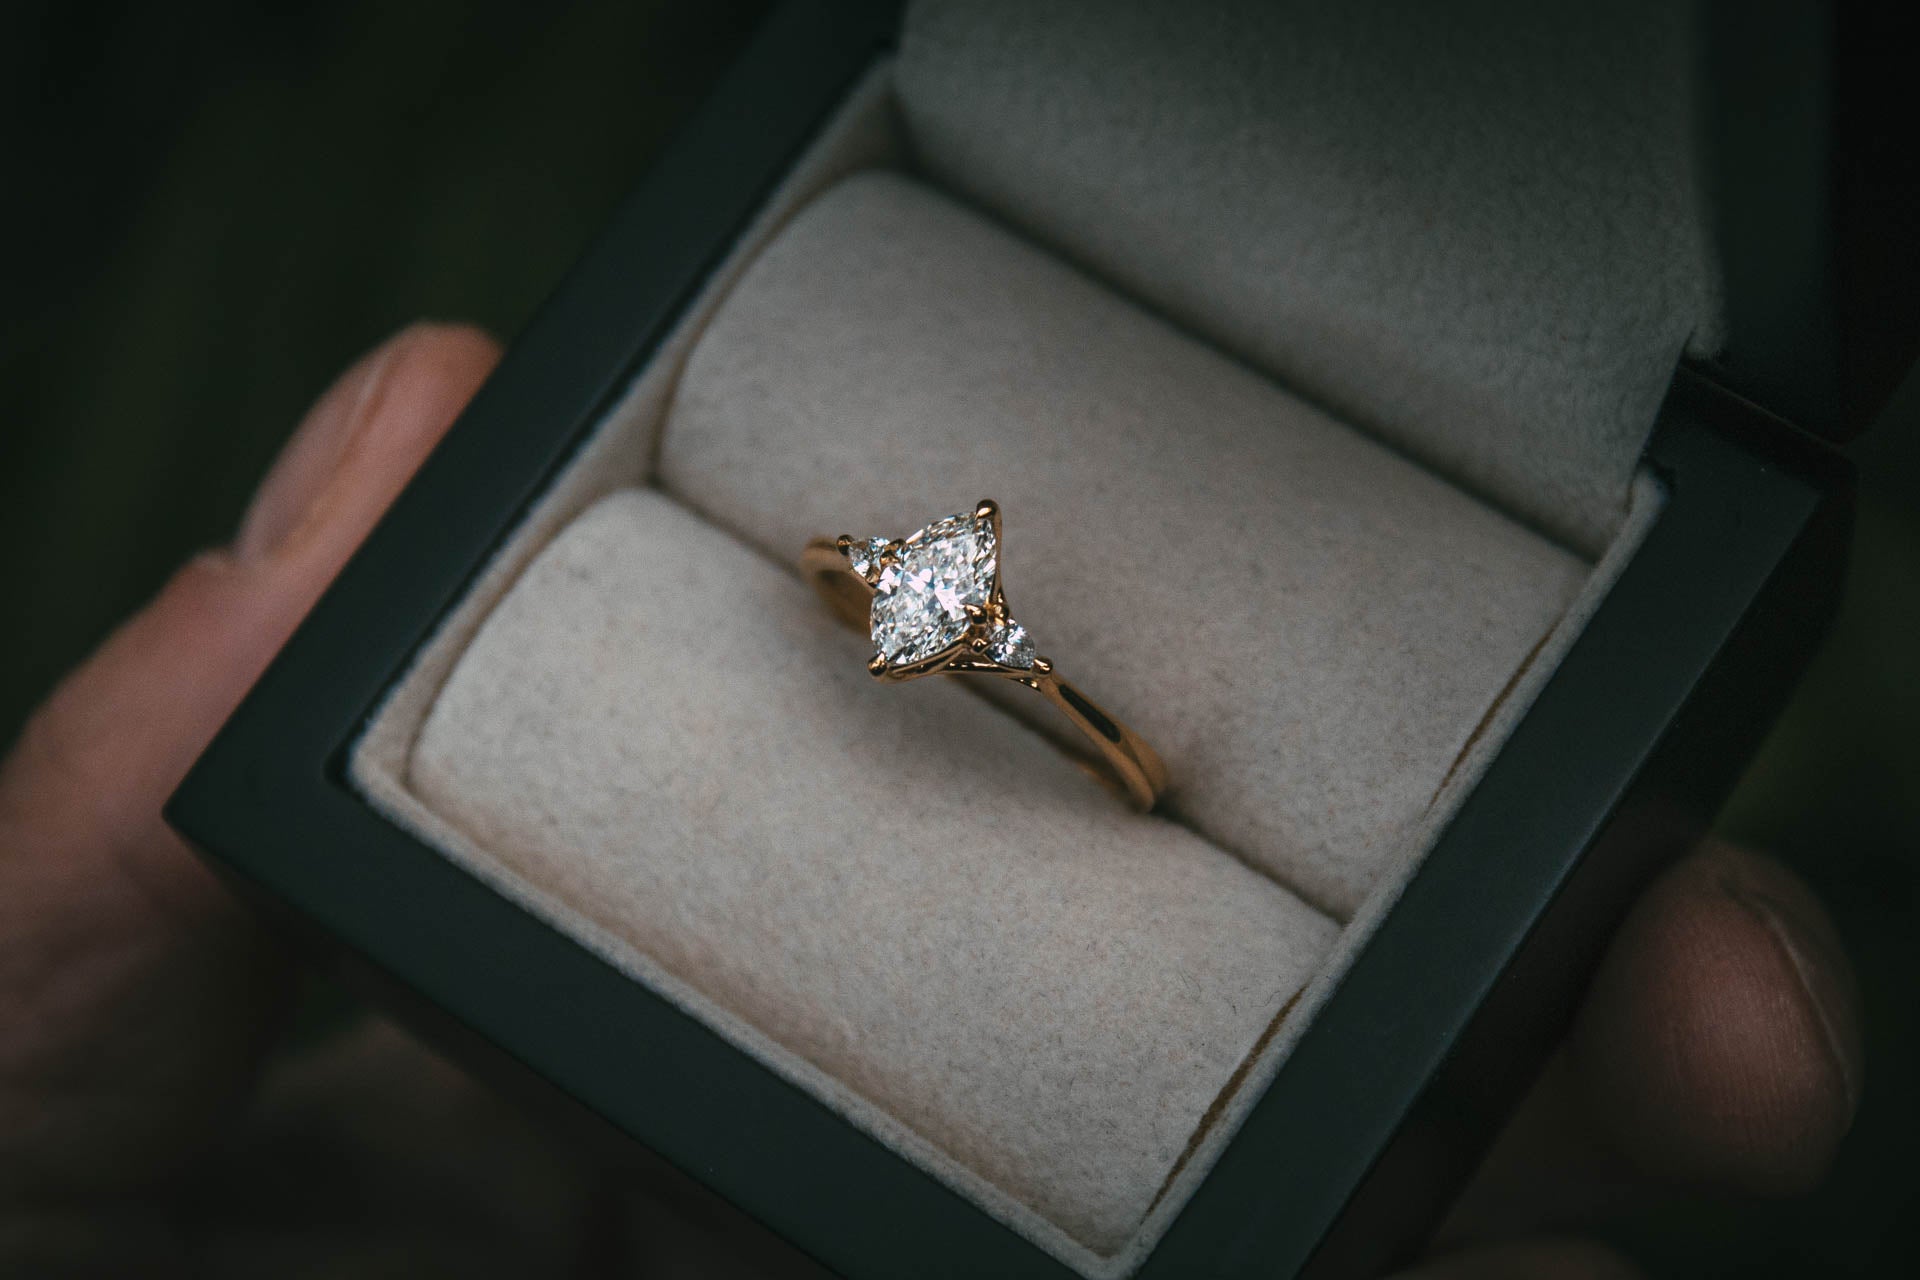 Bespoke marquise diamond engagement ring